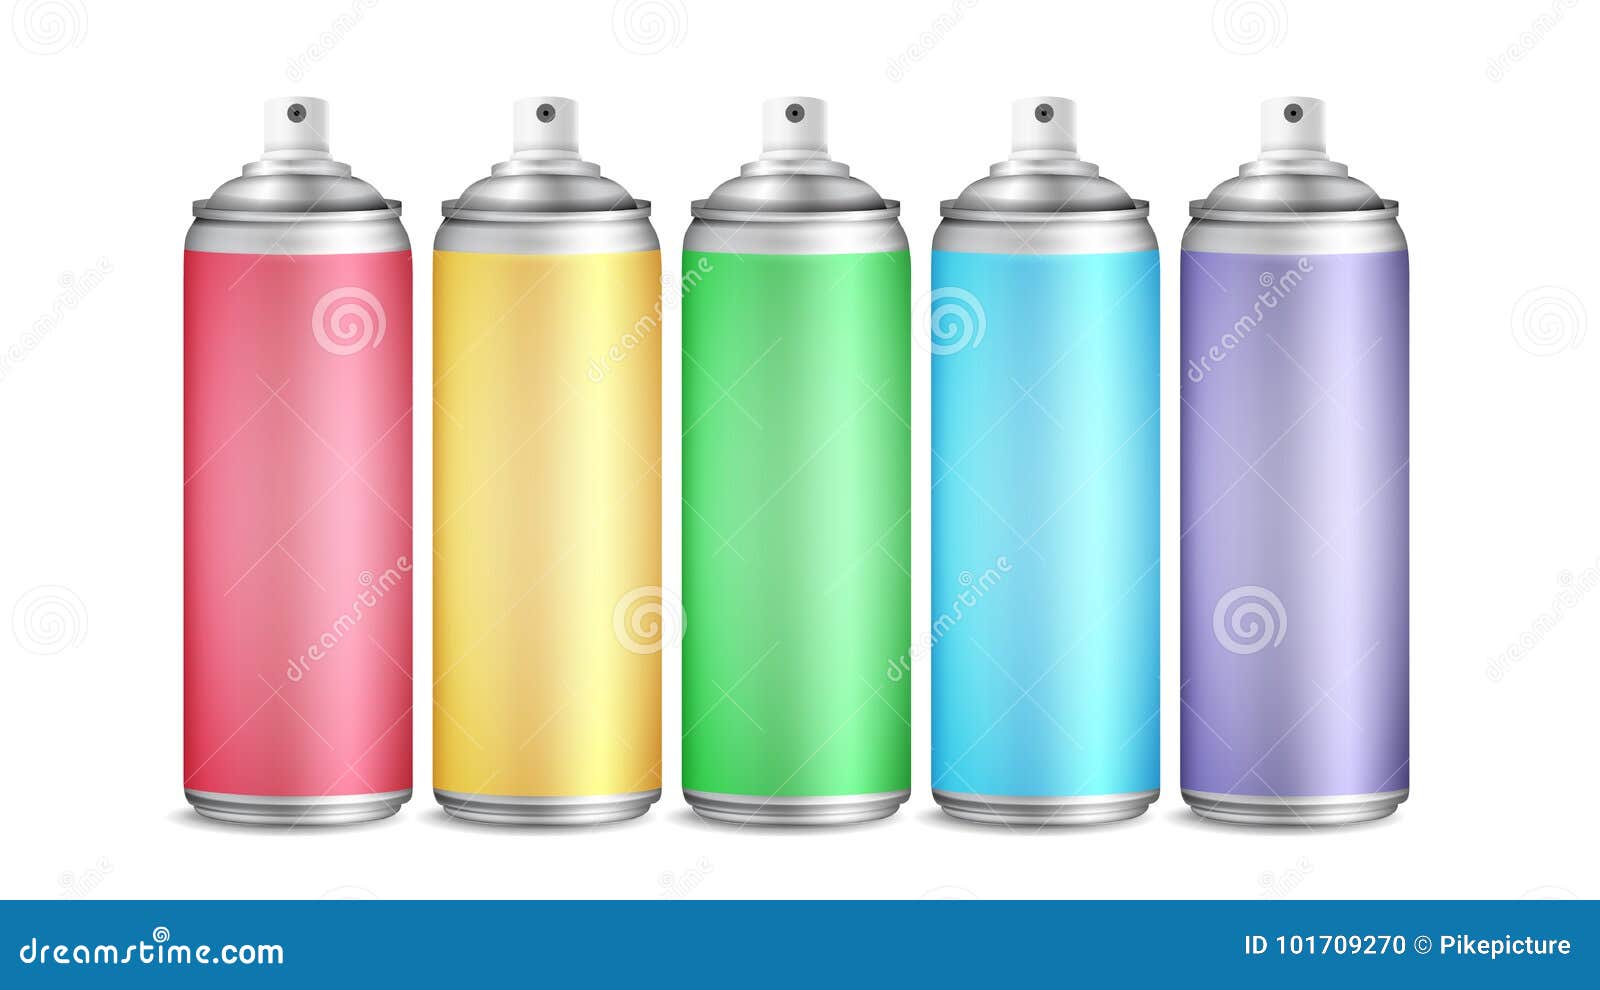 Download Colorful Spray Can Set Vector 3d Aluminium Bottles Paint Aerosol For Street Graffiti Branding Design 3d Packaging Stock Vector Illustration Of Blue Element 101709270 PSD Mockup Templates